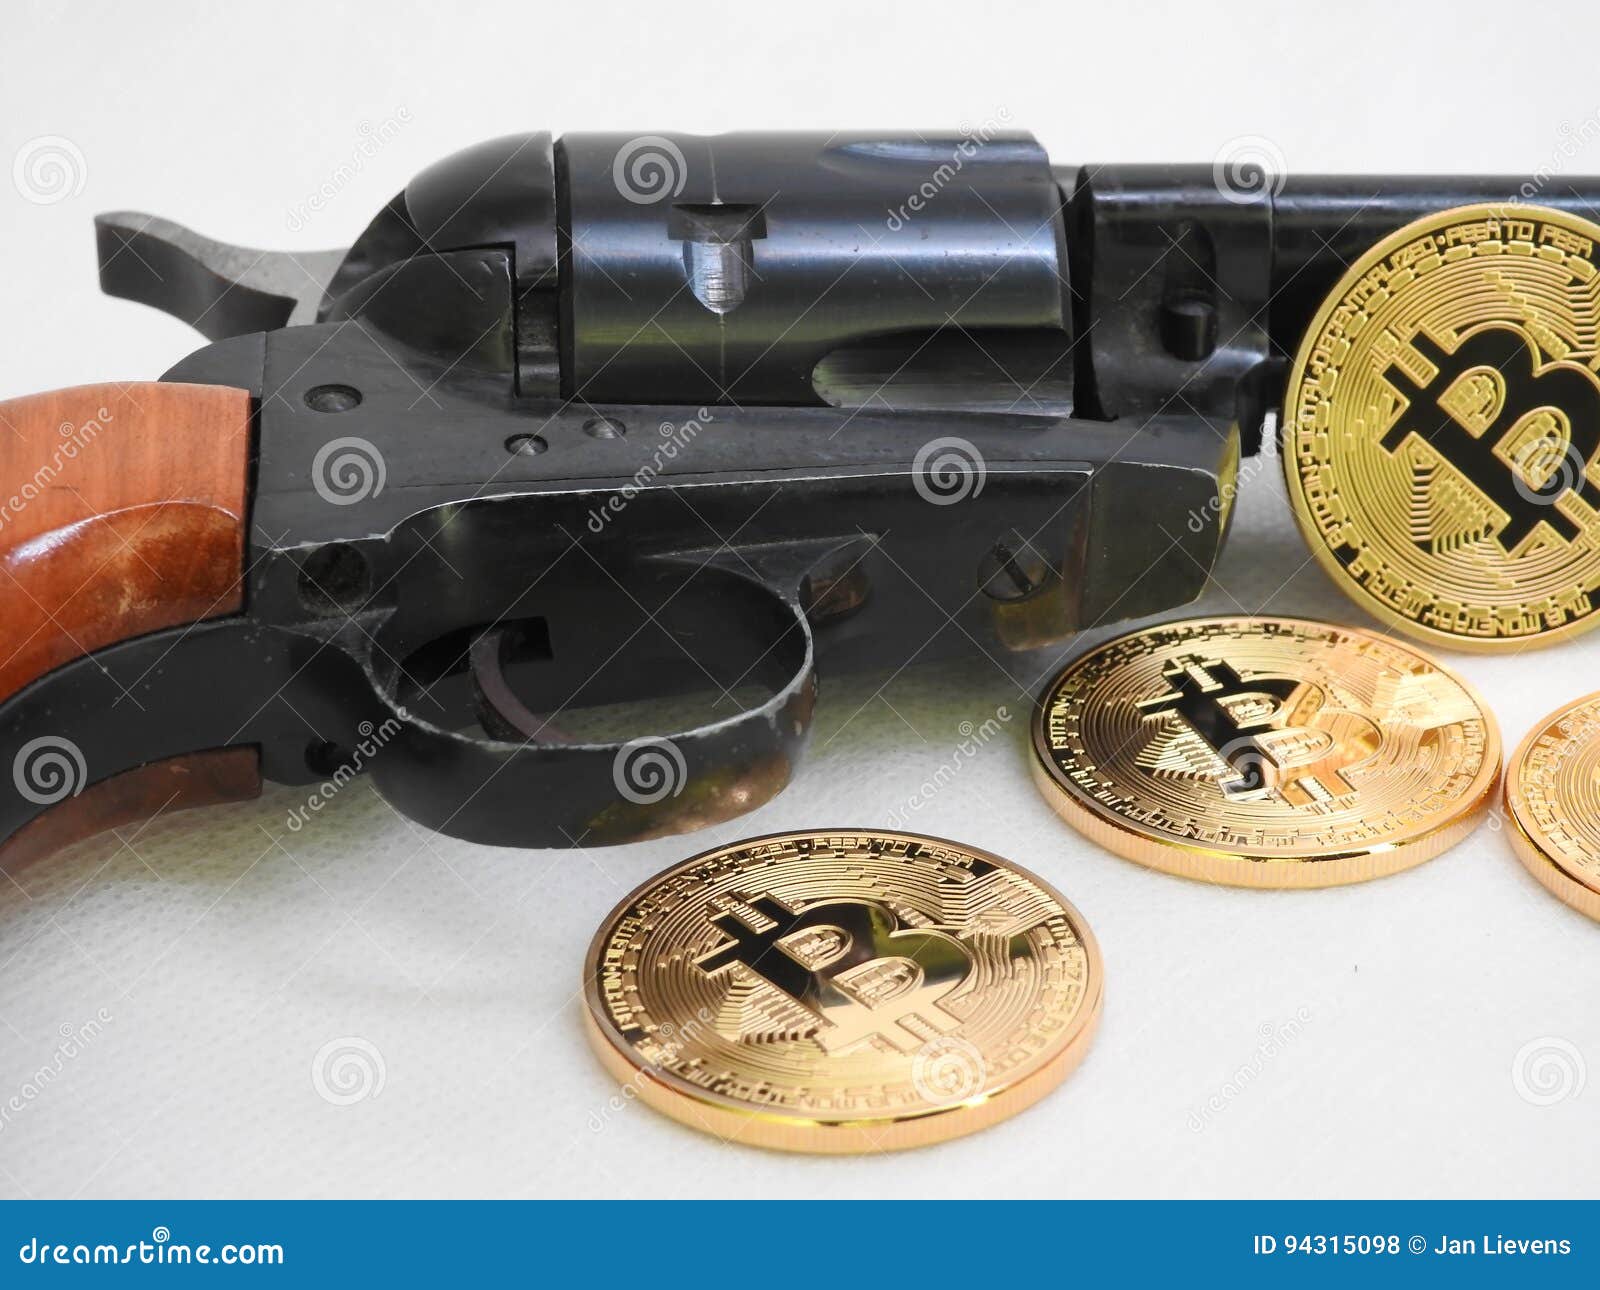 buy guns with bitcoin